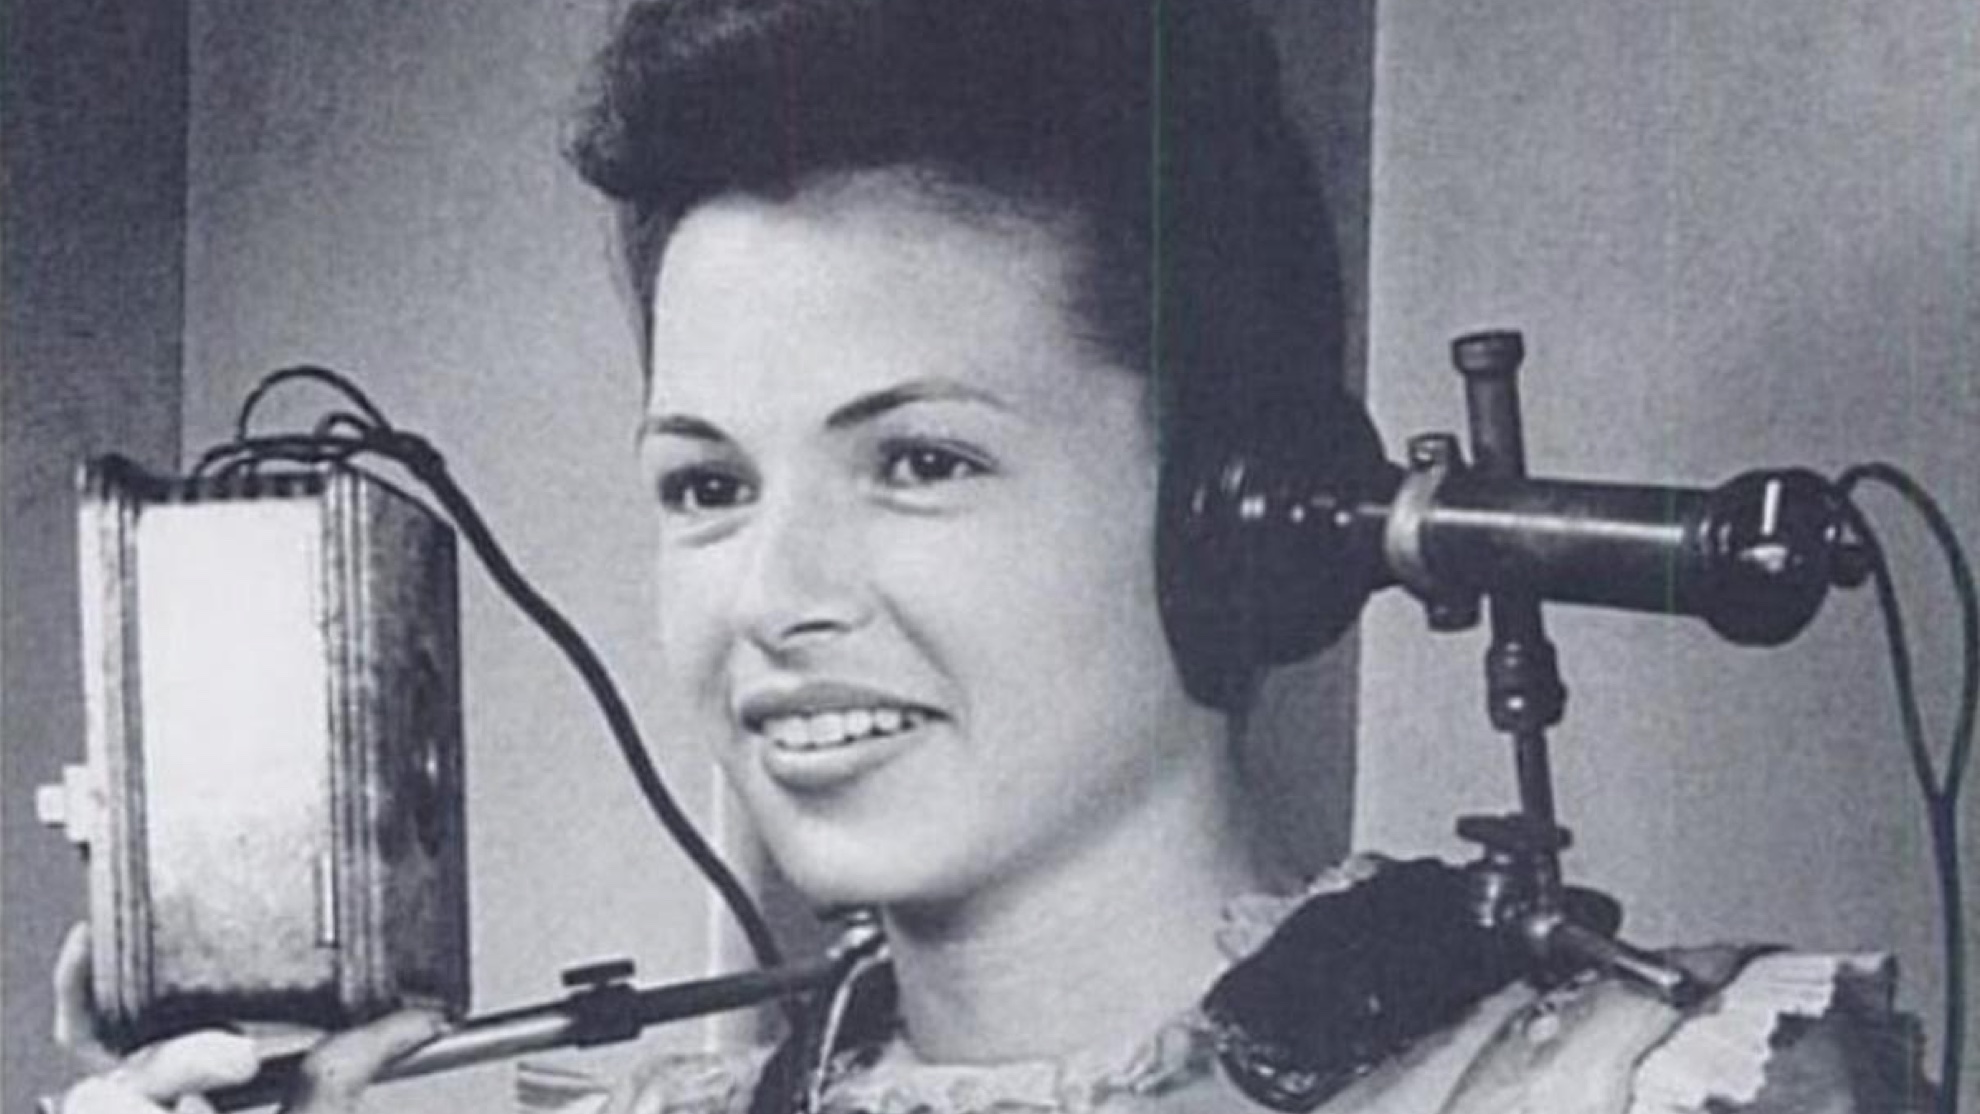 A woman wearing early headphones